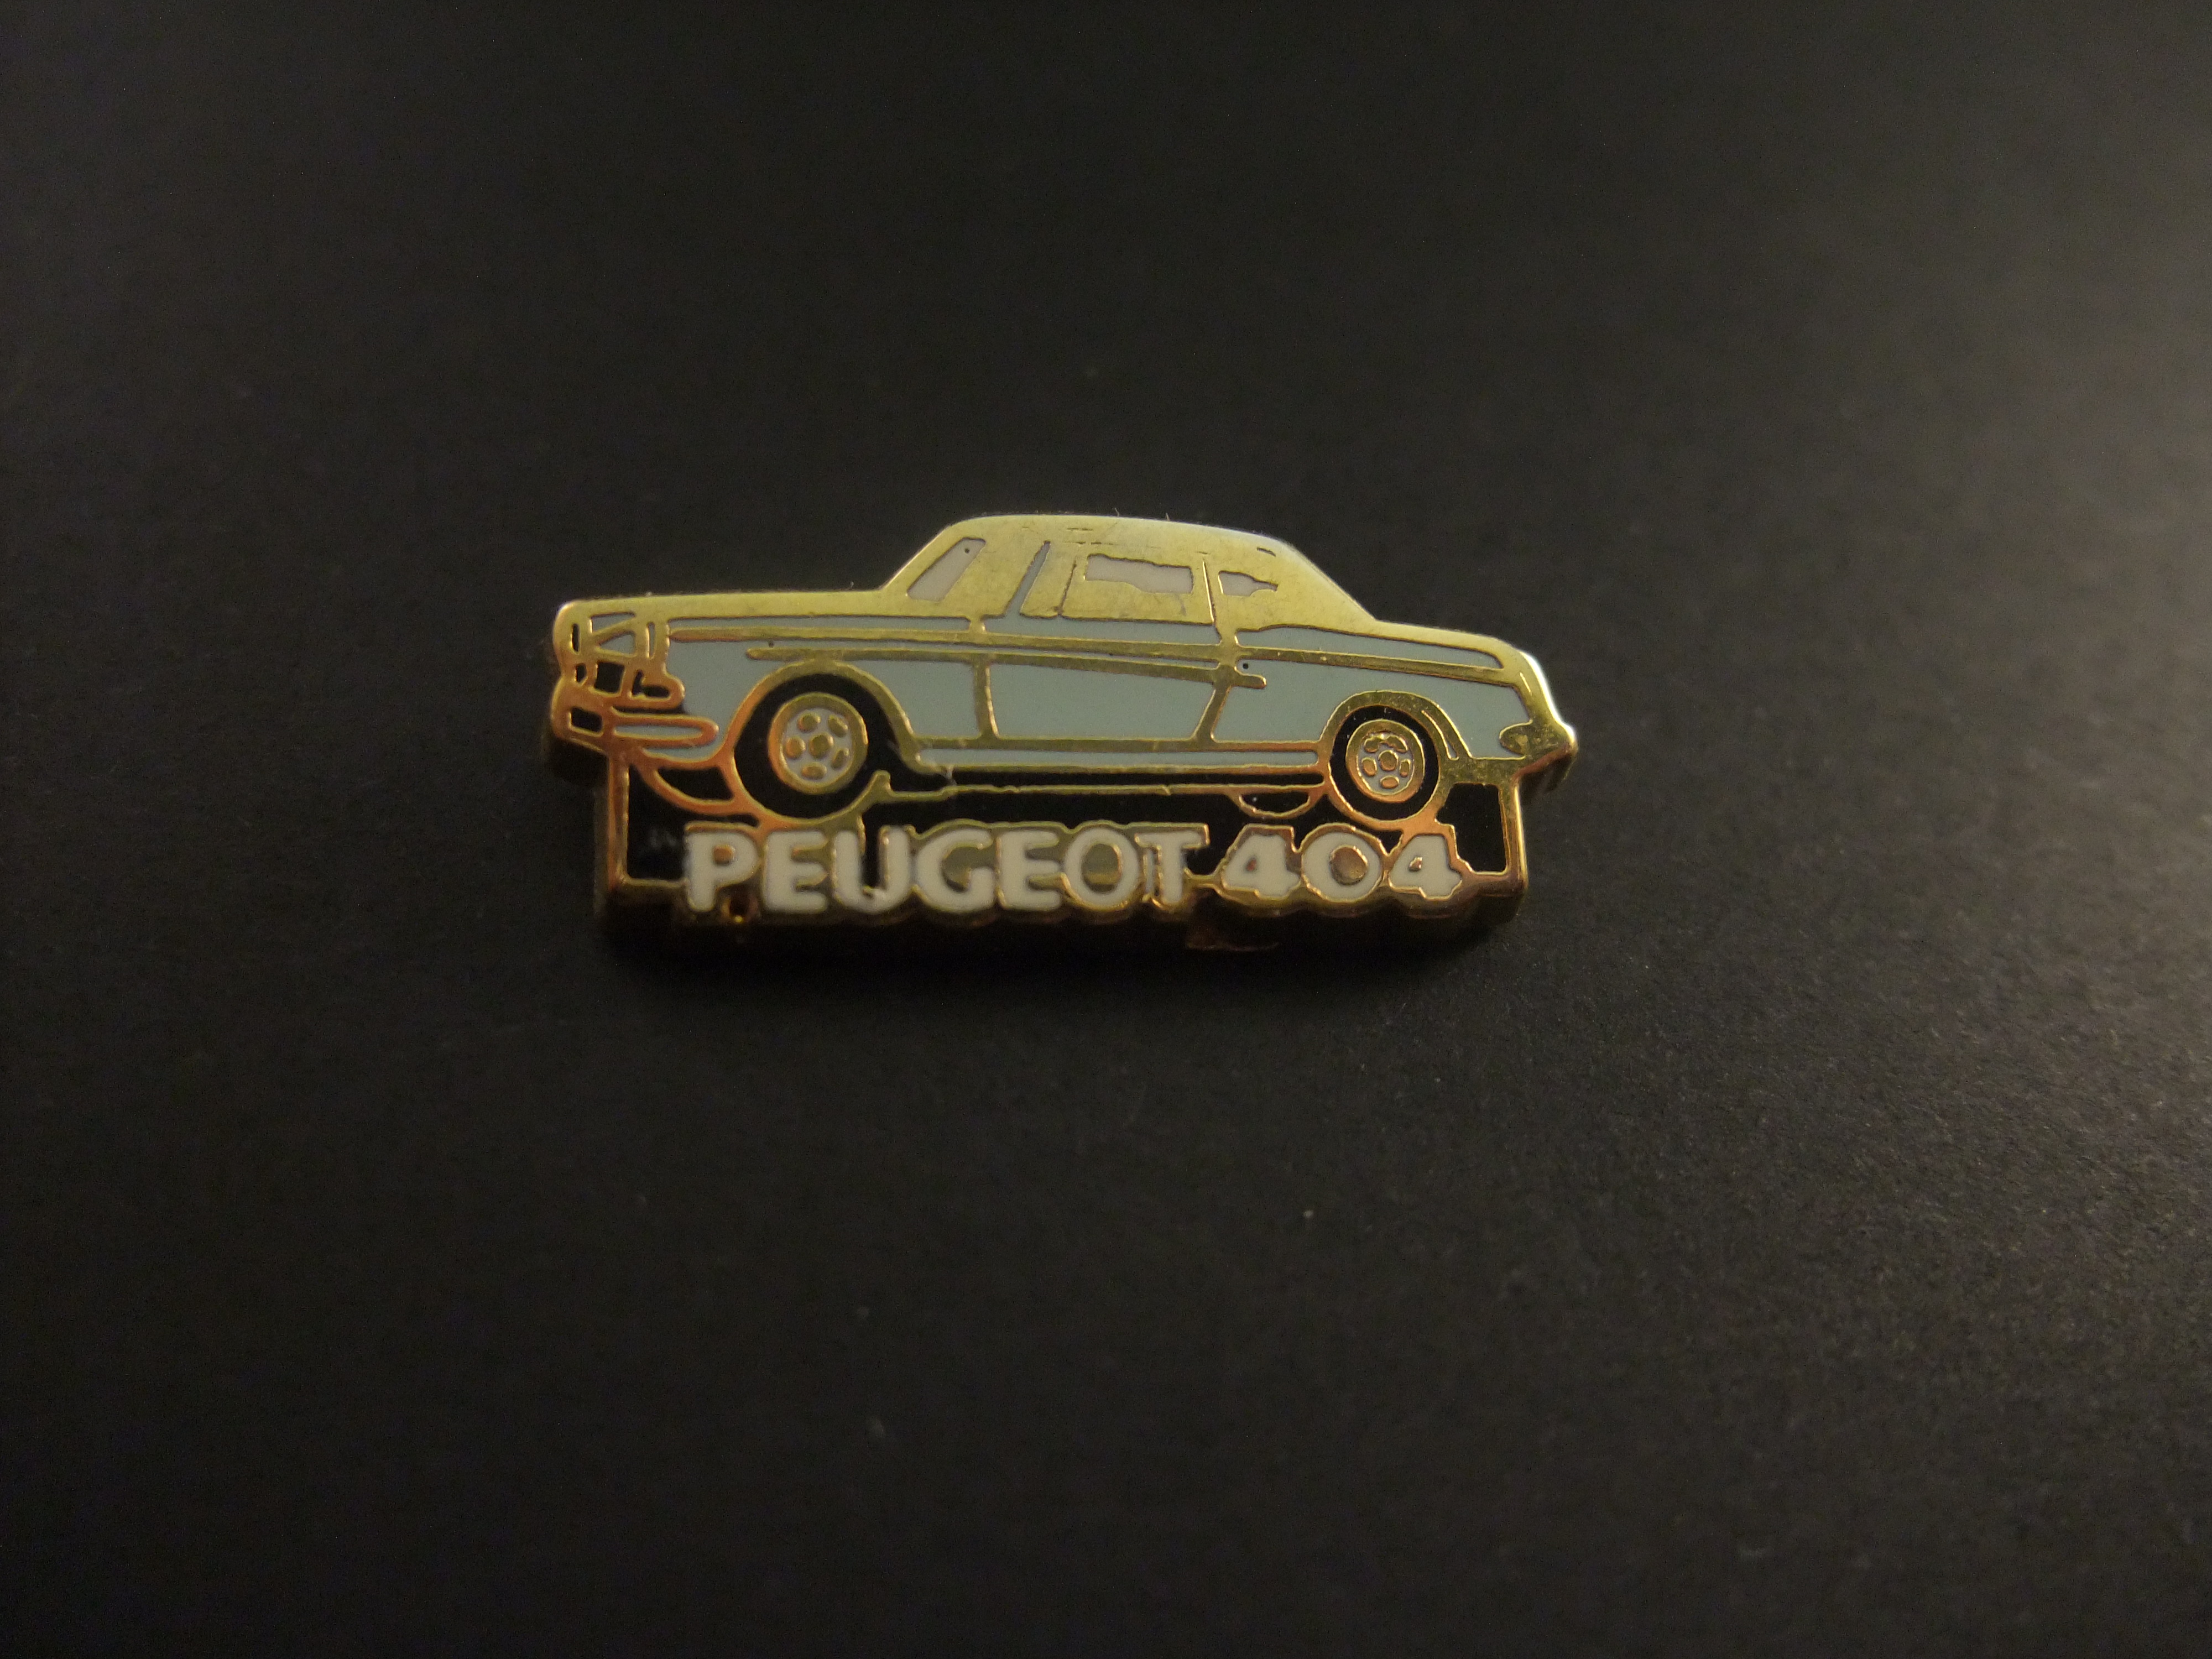 Peugeot 404 oud model blauw